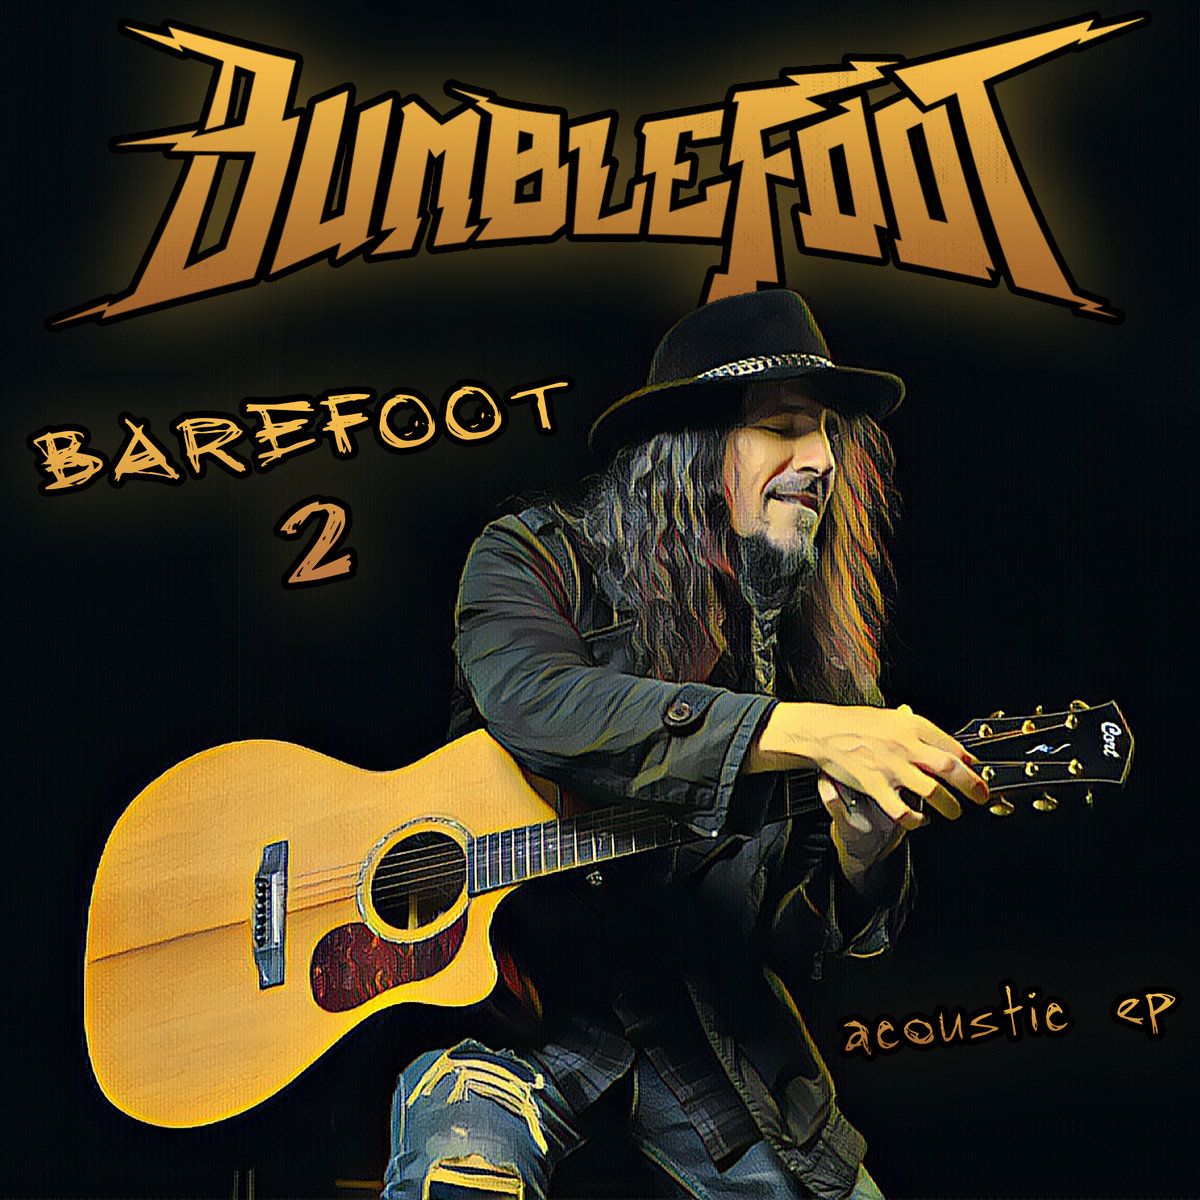 "Barefoot 2"-Akustik-EP komplett im Stream